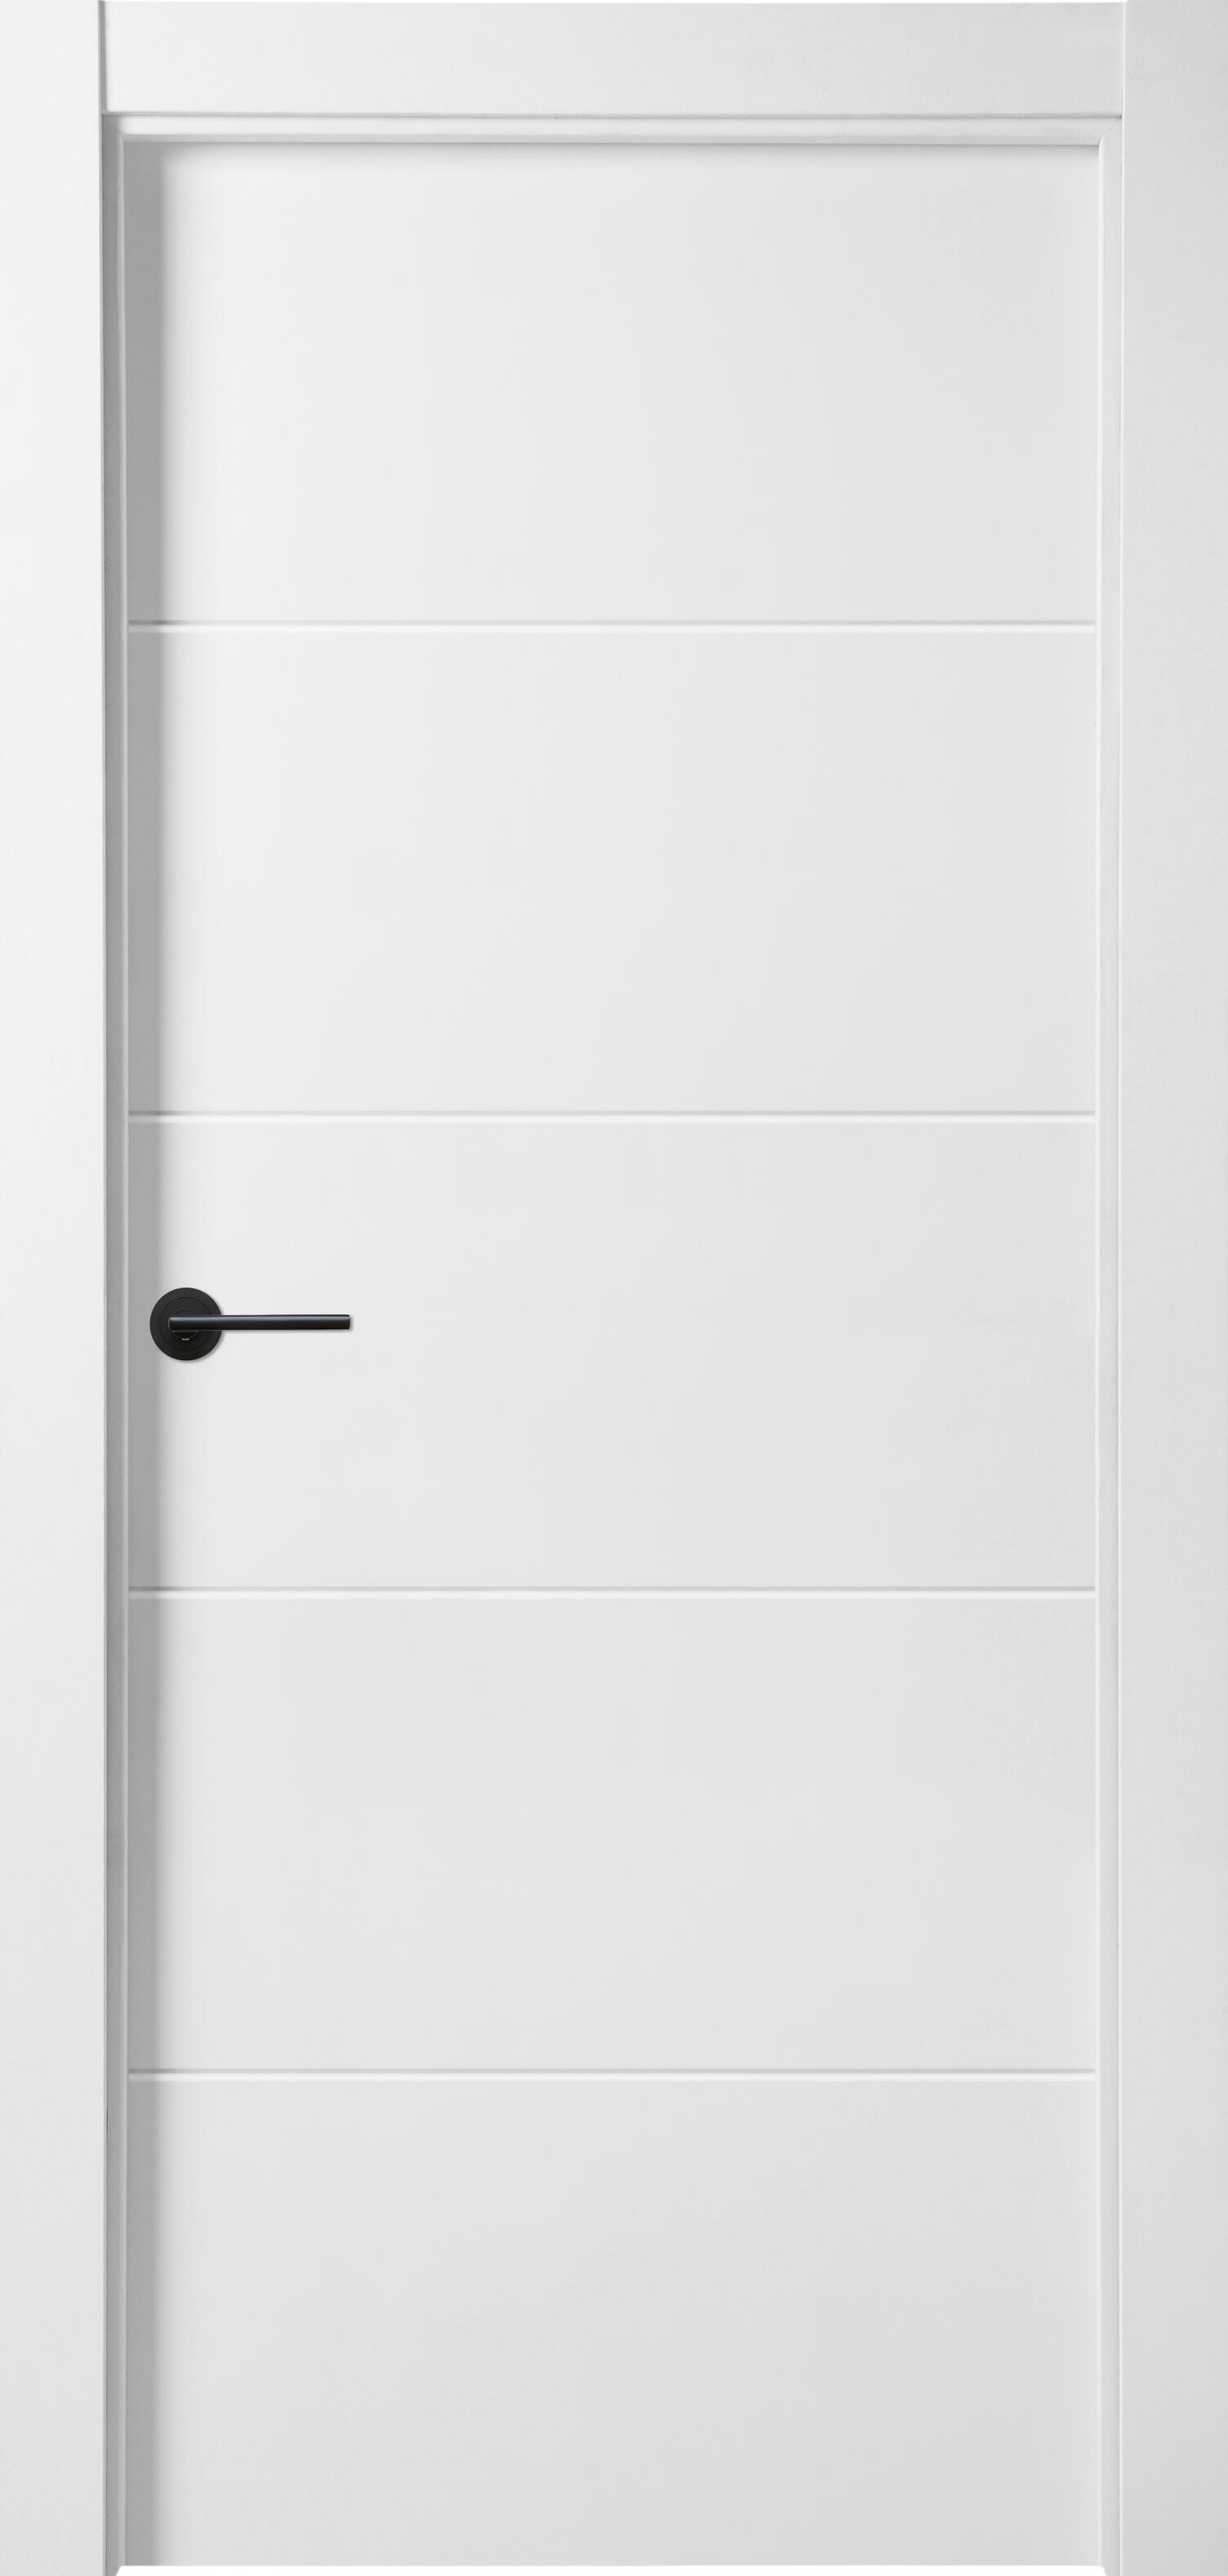 Puerta lucerna plus black blanco de apertura derecha de 9x72.5 cm